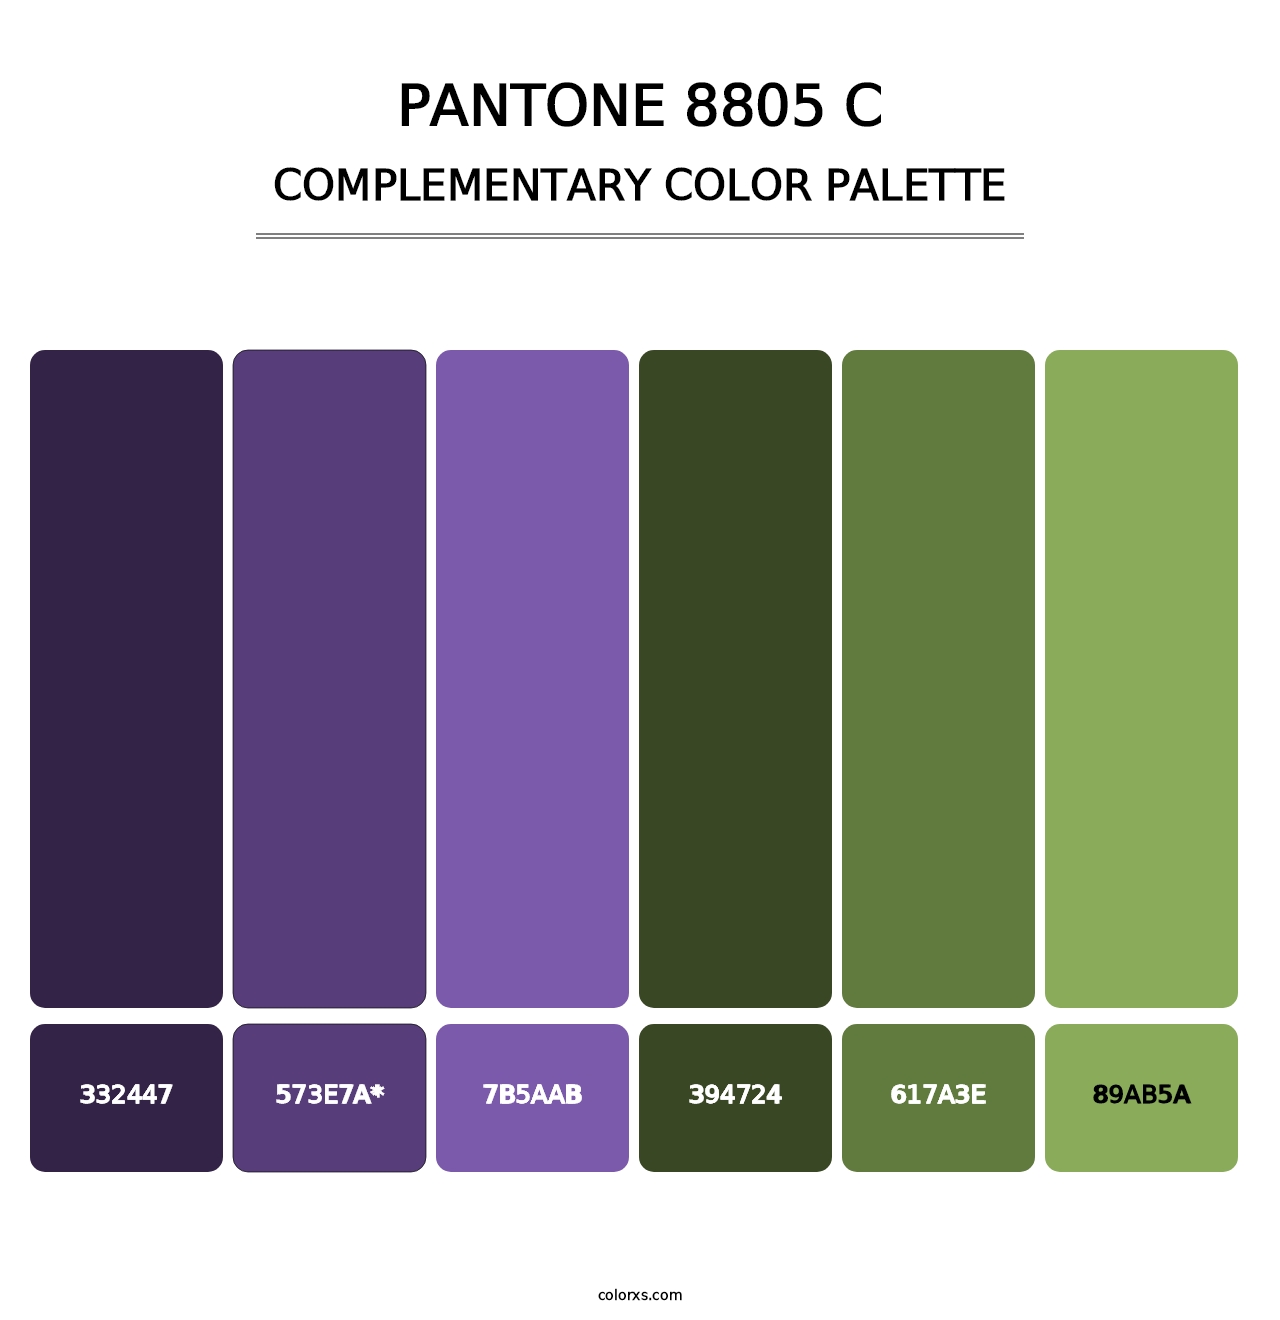 PANTONE 8805 C - Complementary Color Palette